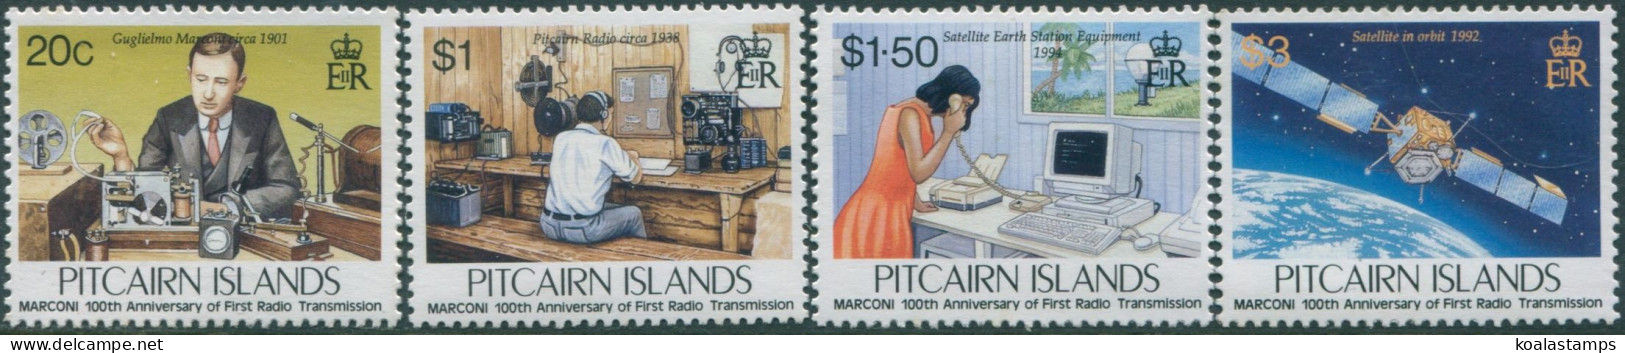 Pitcairn Islands 1995 SG479-482 First Radio Transmission Set MNH - Pitcairn